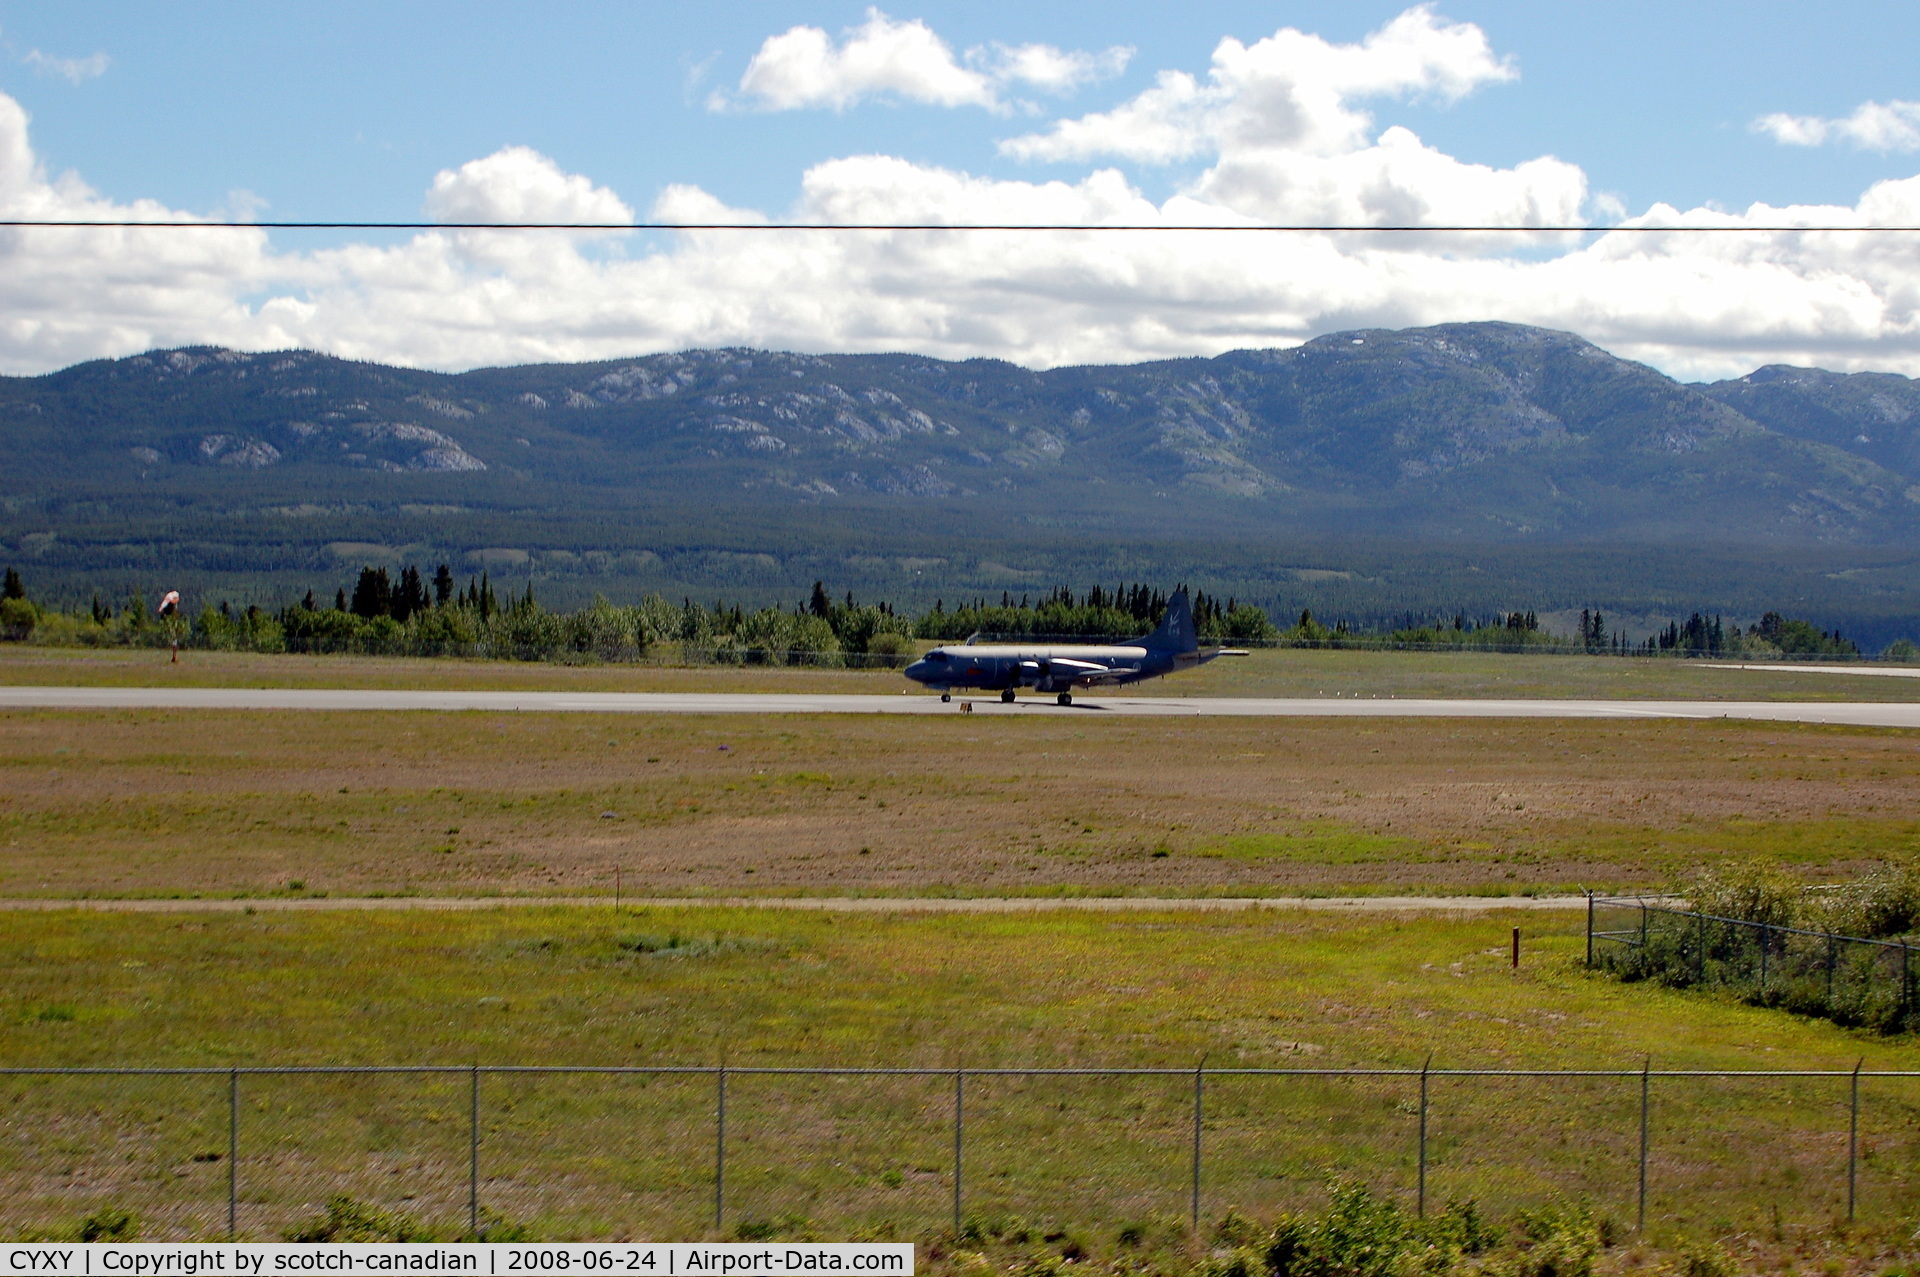 Whitehorse International Airport, Whitehorse, Yukon Canada (CYXY) - Canadian Forces Lockheed Martin CP-140 